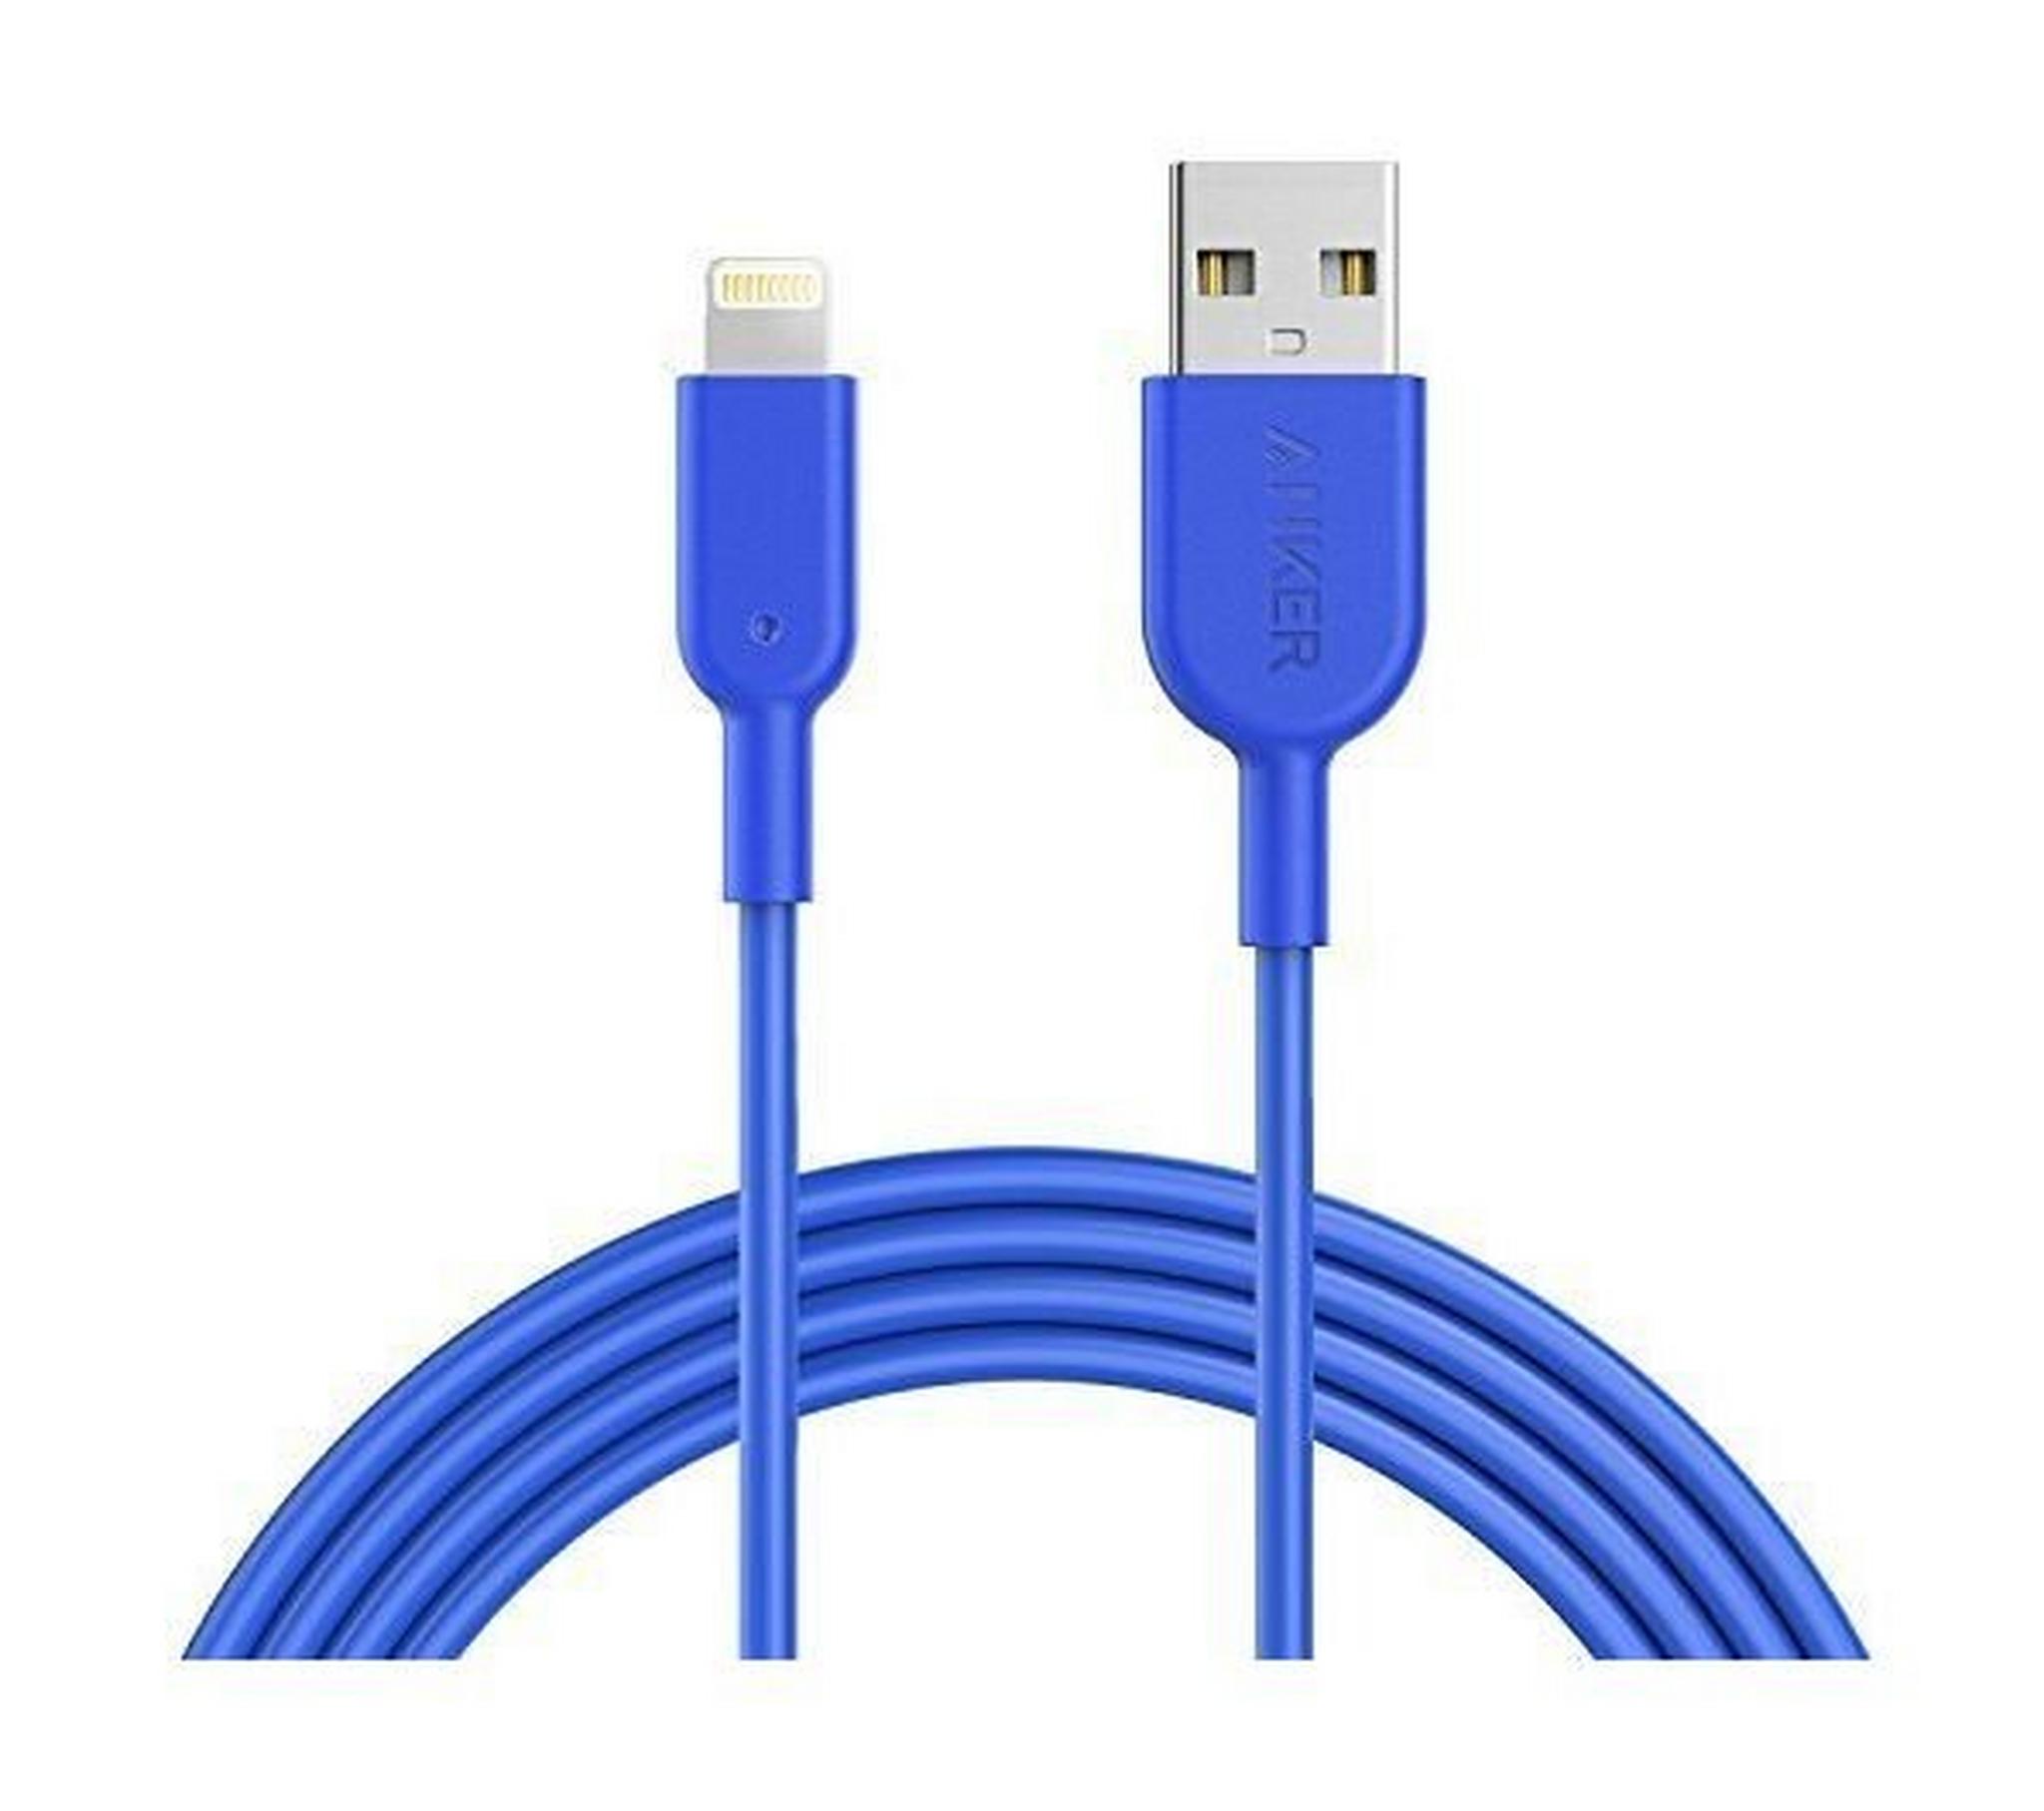 Anker PowerLine II Lightning Cable 1.8m - Blue